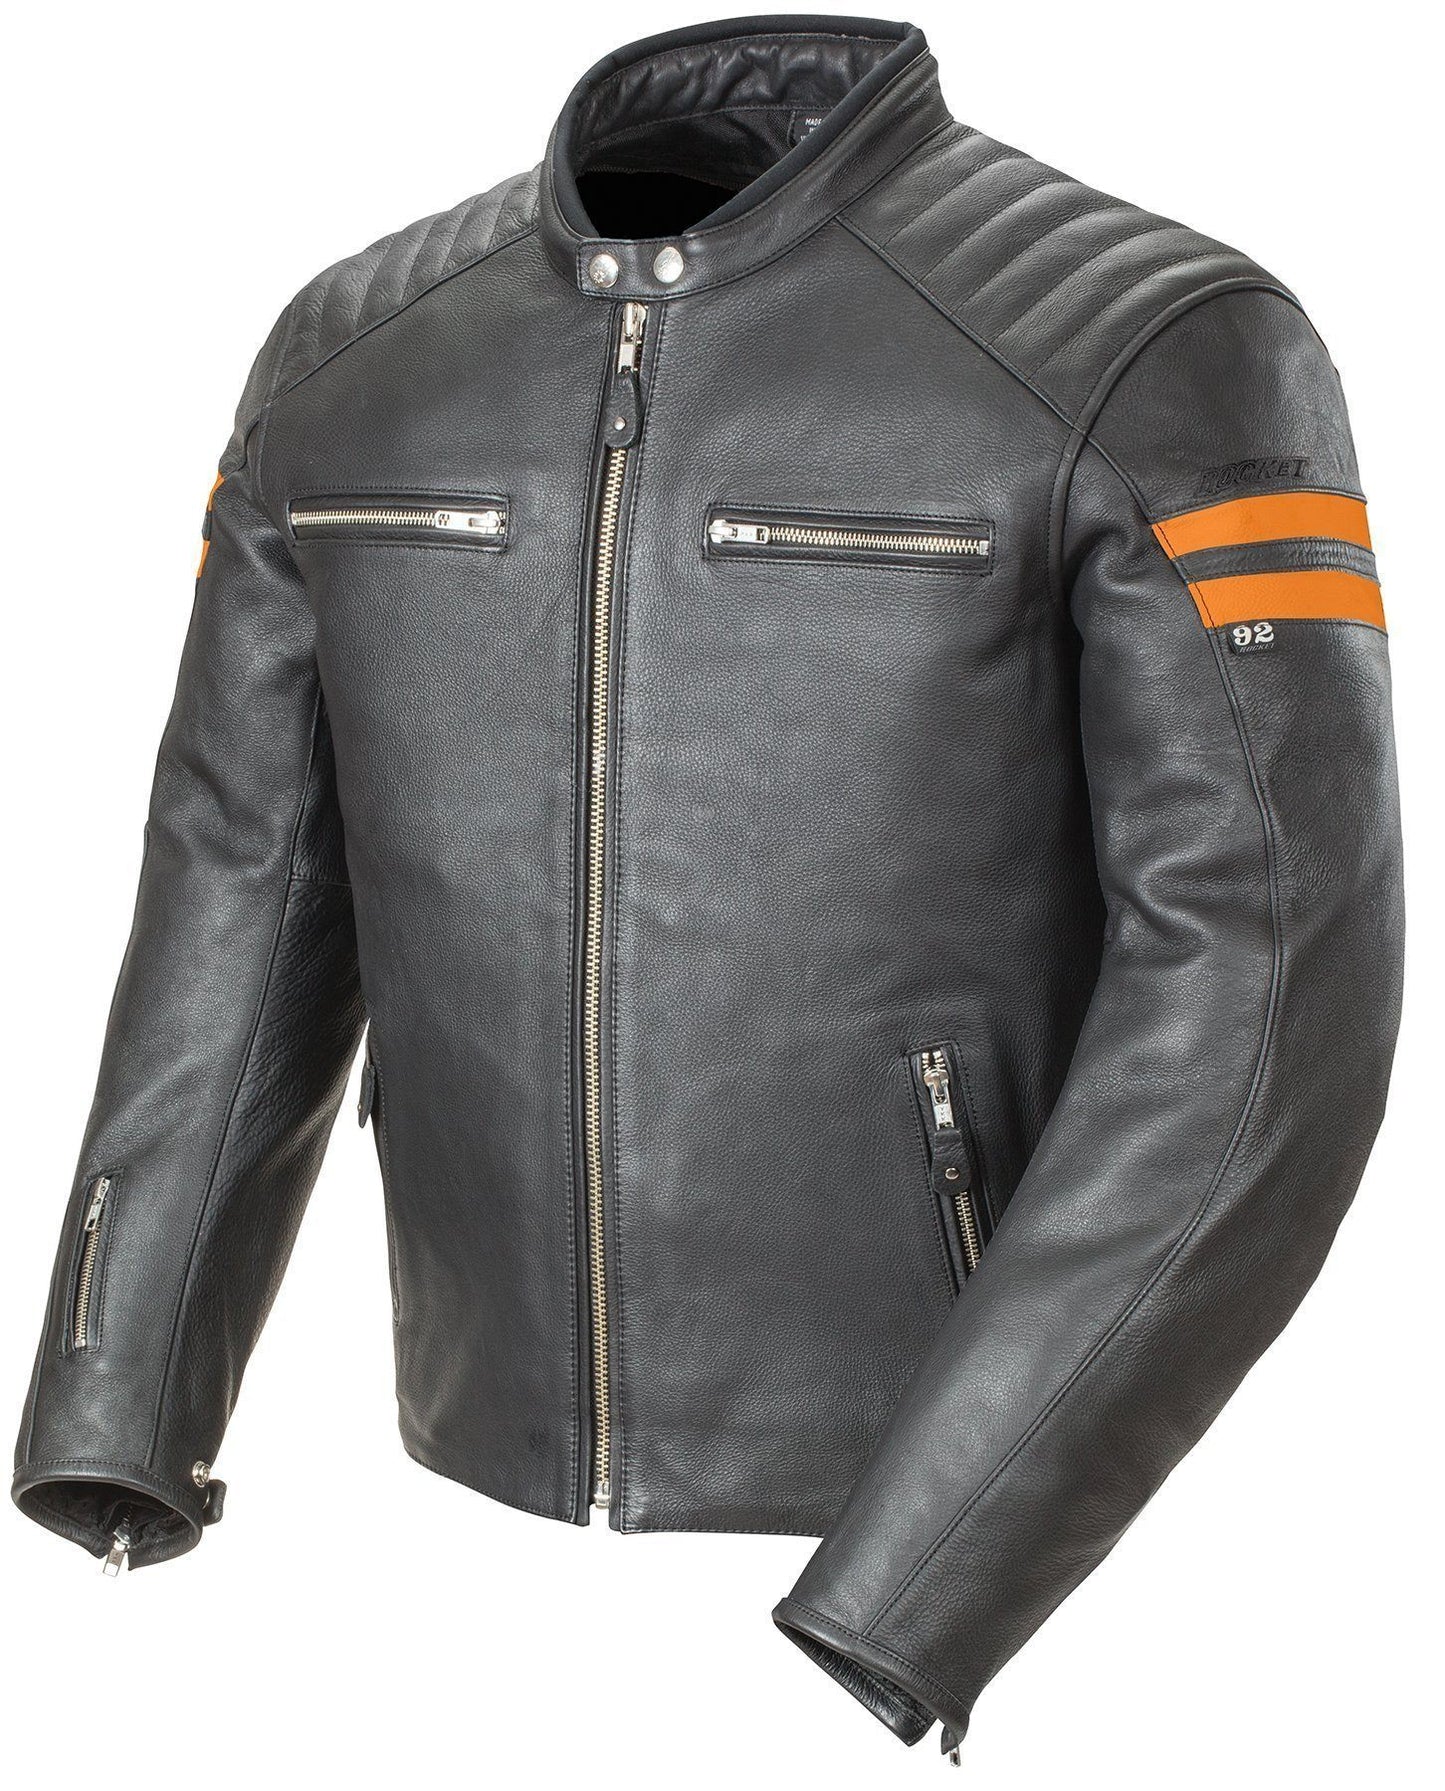 Joe Rocket 'Classic 92' Mens Black and Orange Leather Motorcycle Jacket